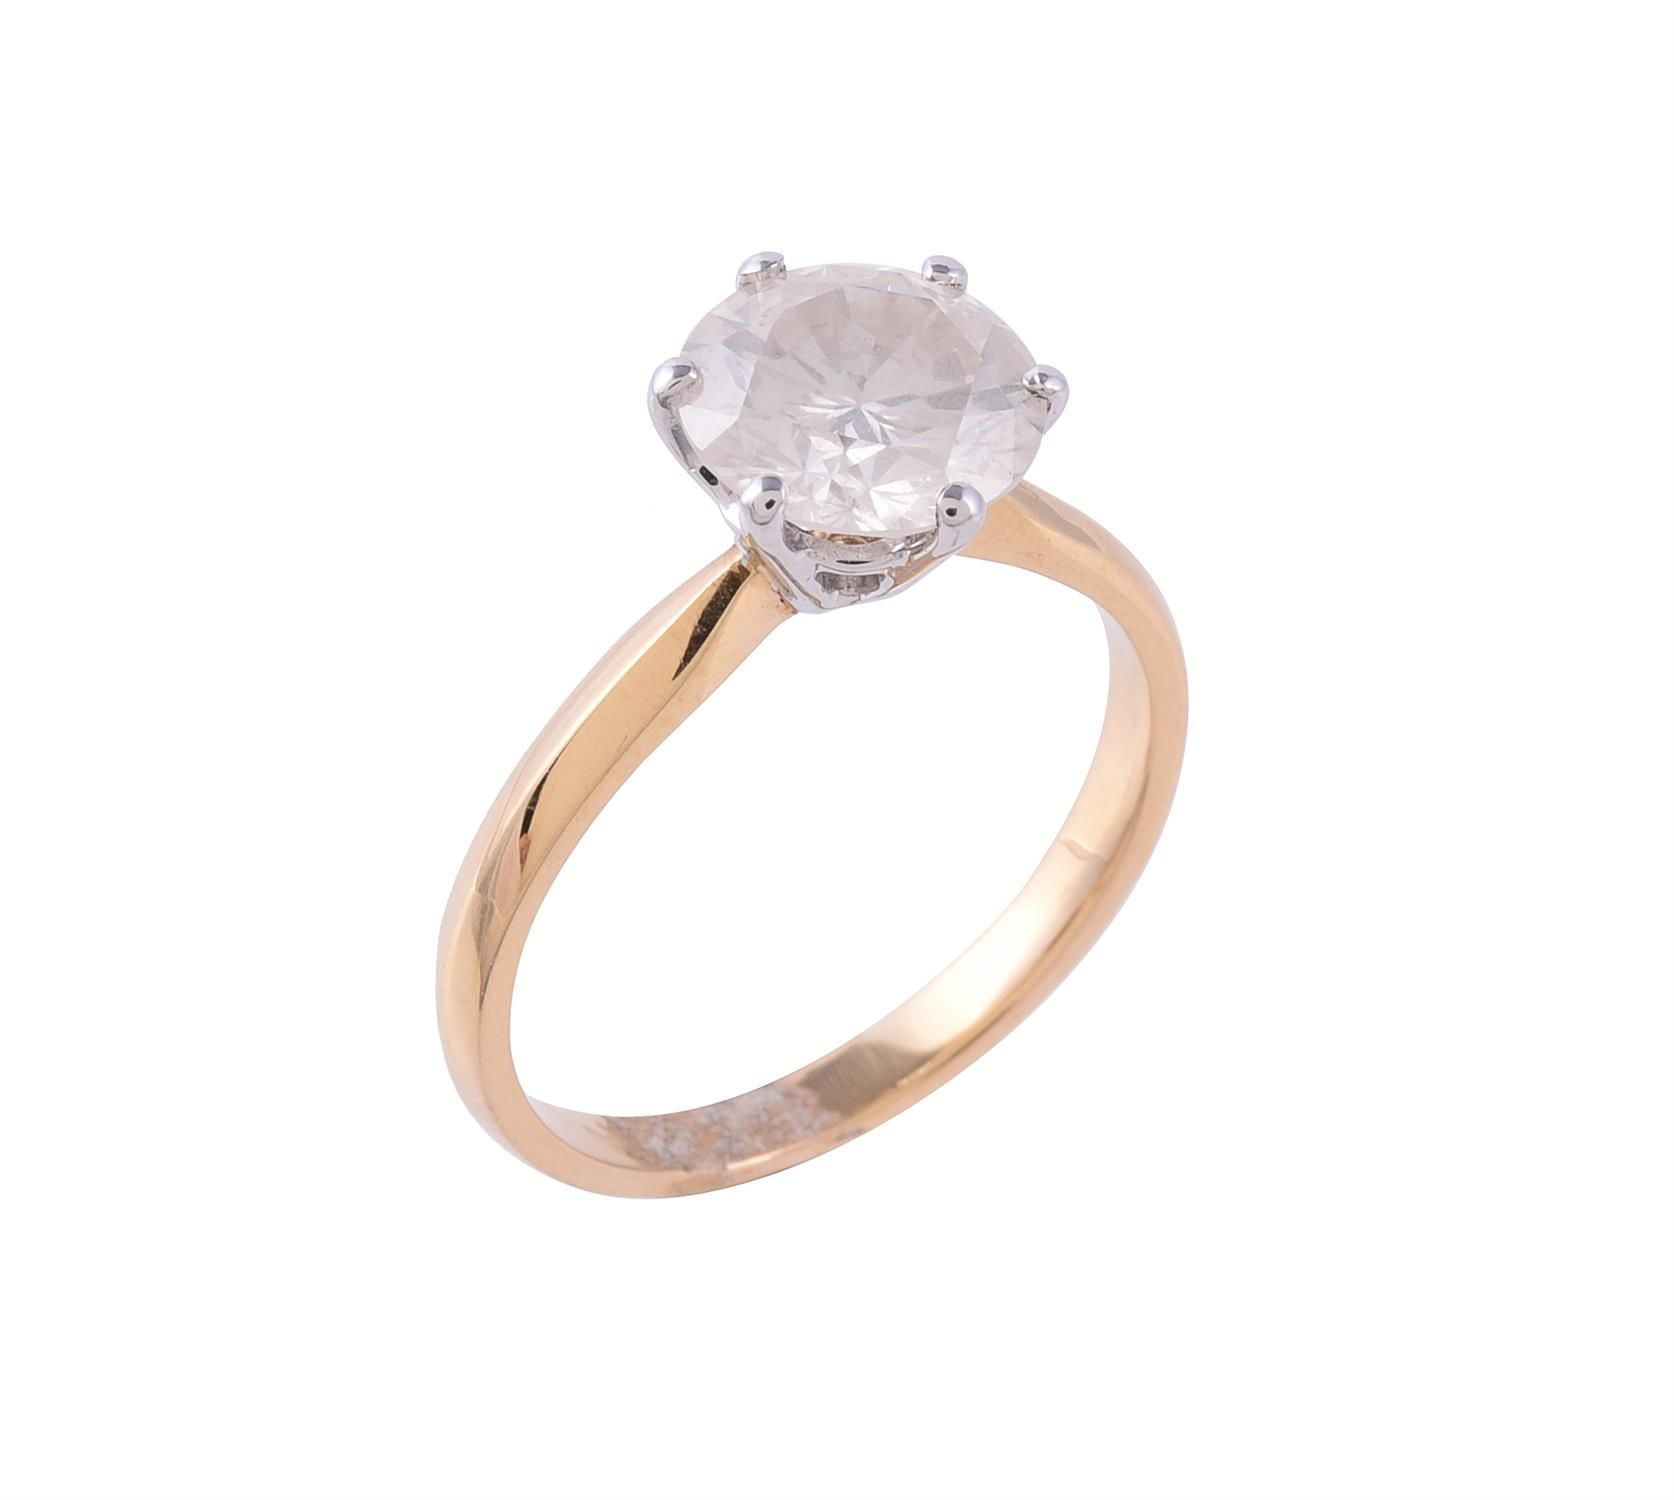 A single stone diamond ring A single stone diamond ring, the brilliant cut diamo&hellip;